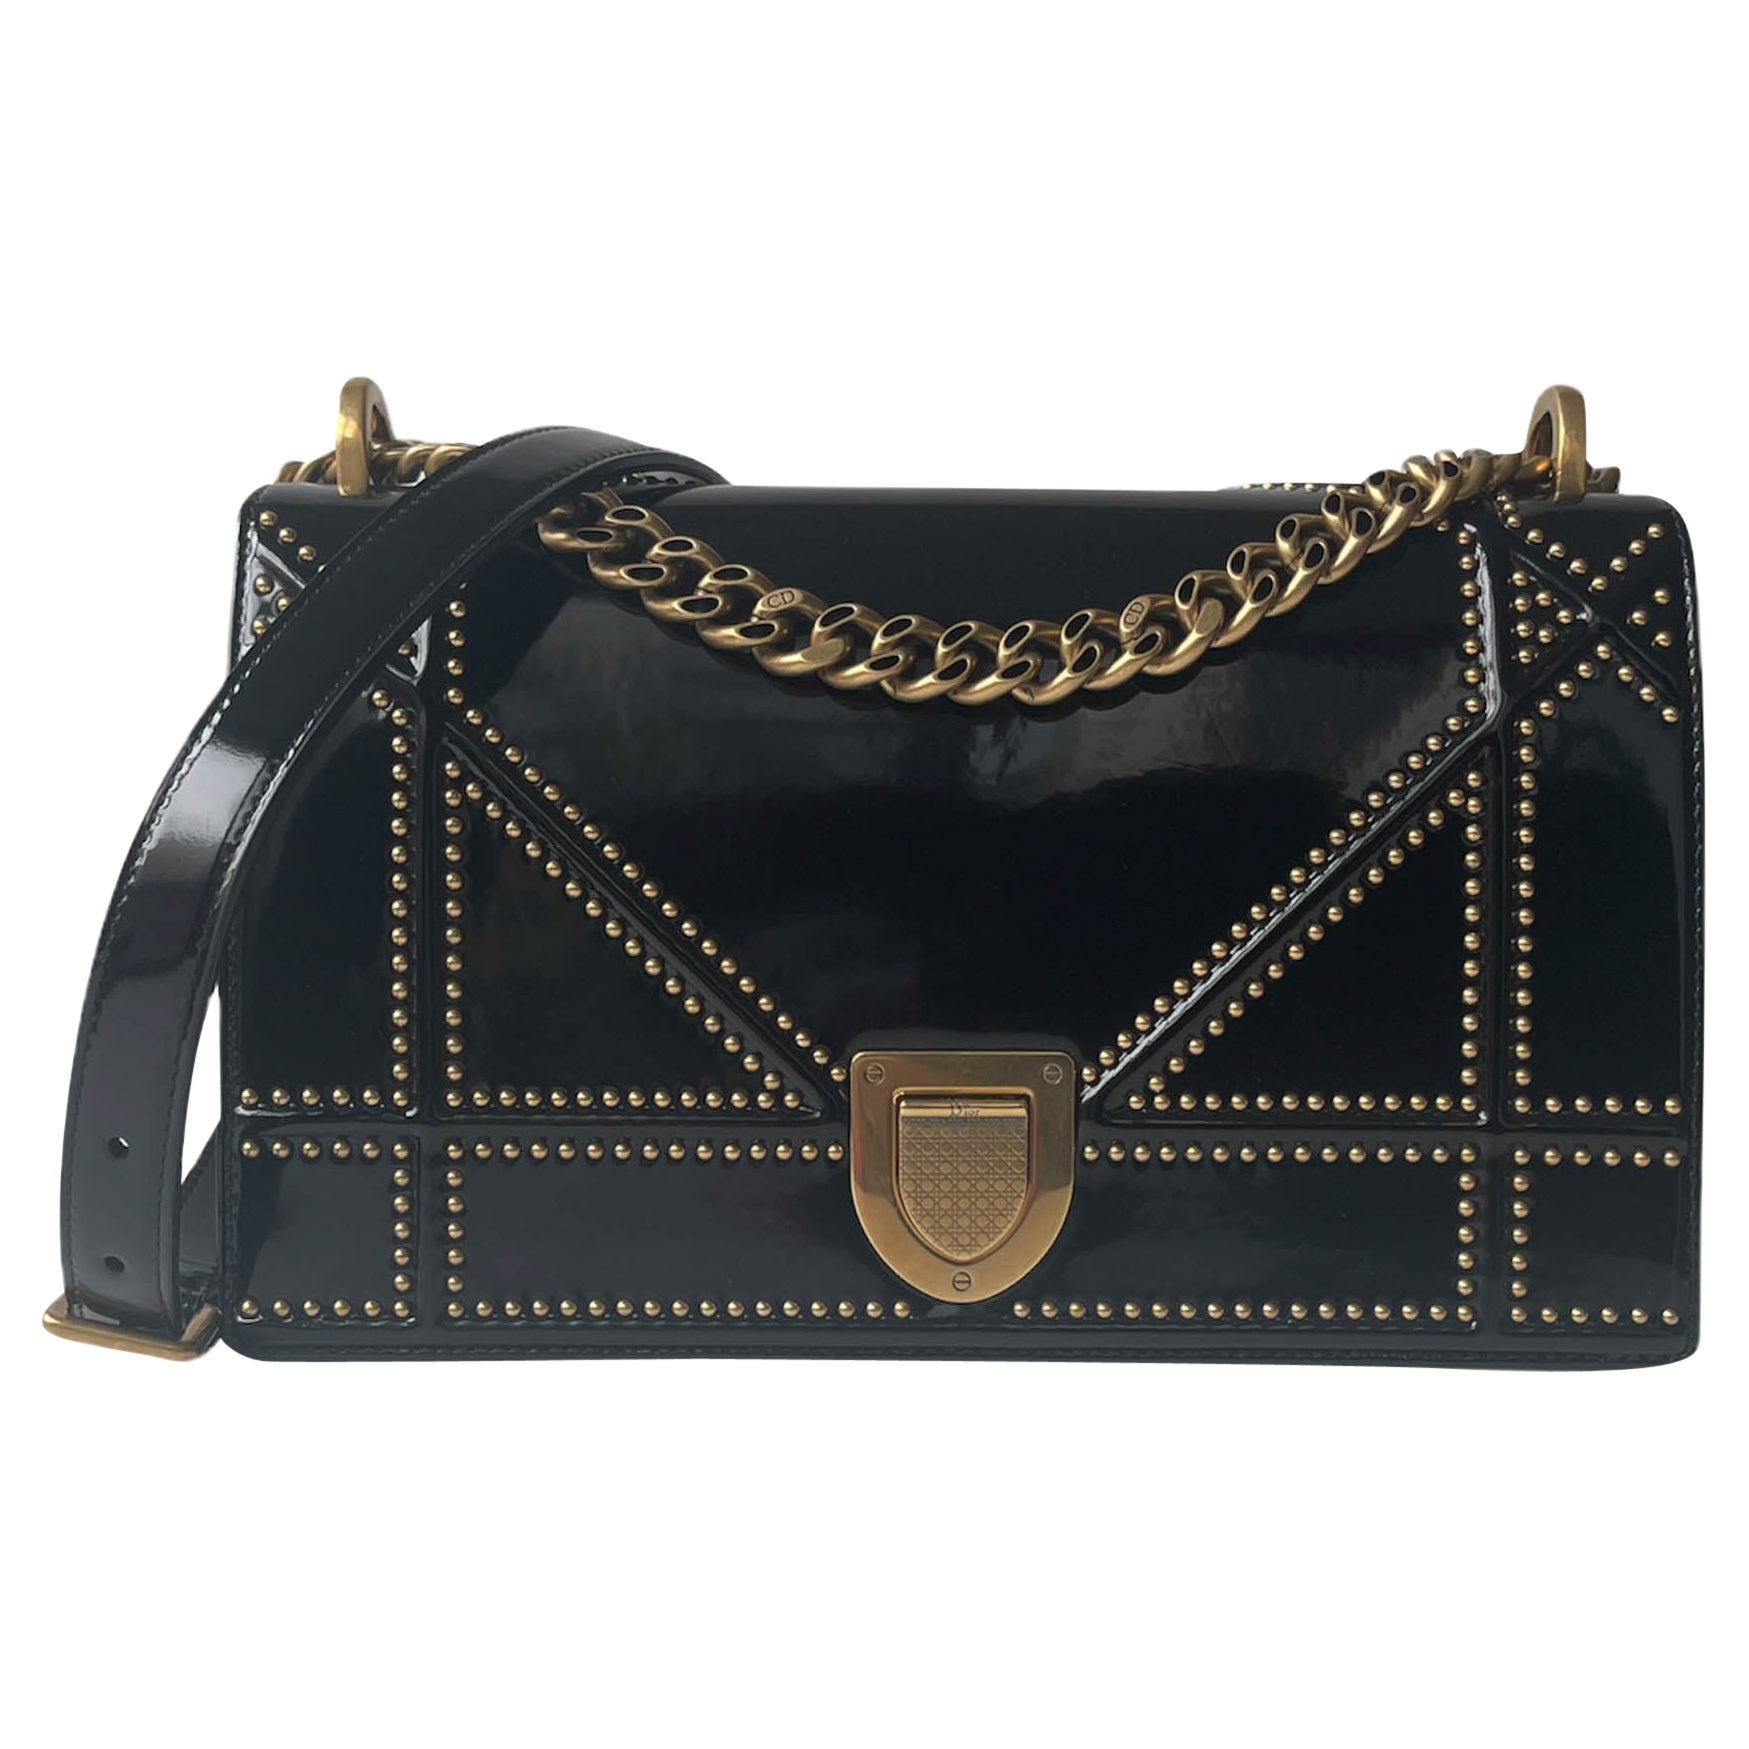 Dior Black Patent Leather Studded Medium Diorama Flap Bag rt. $3, 600